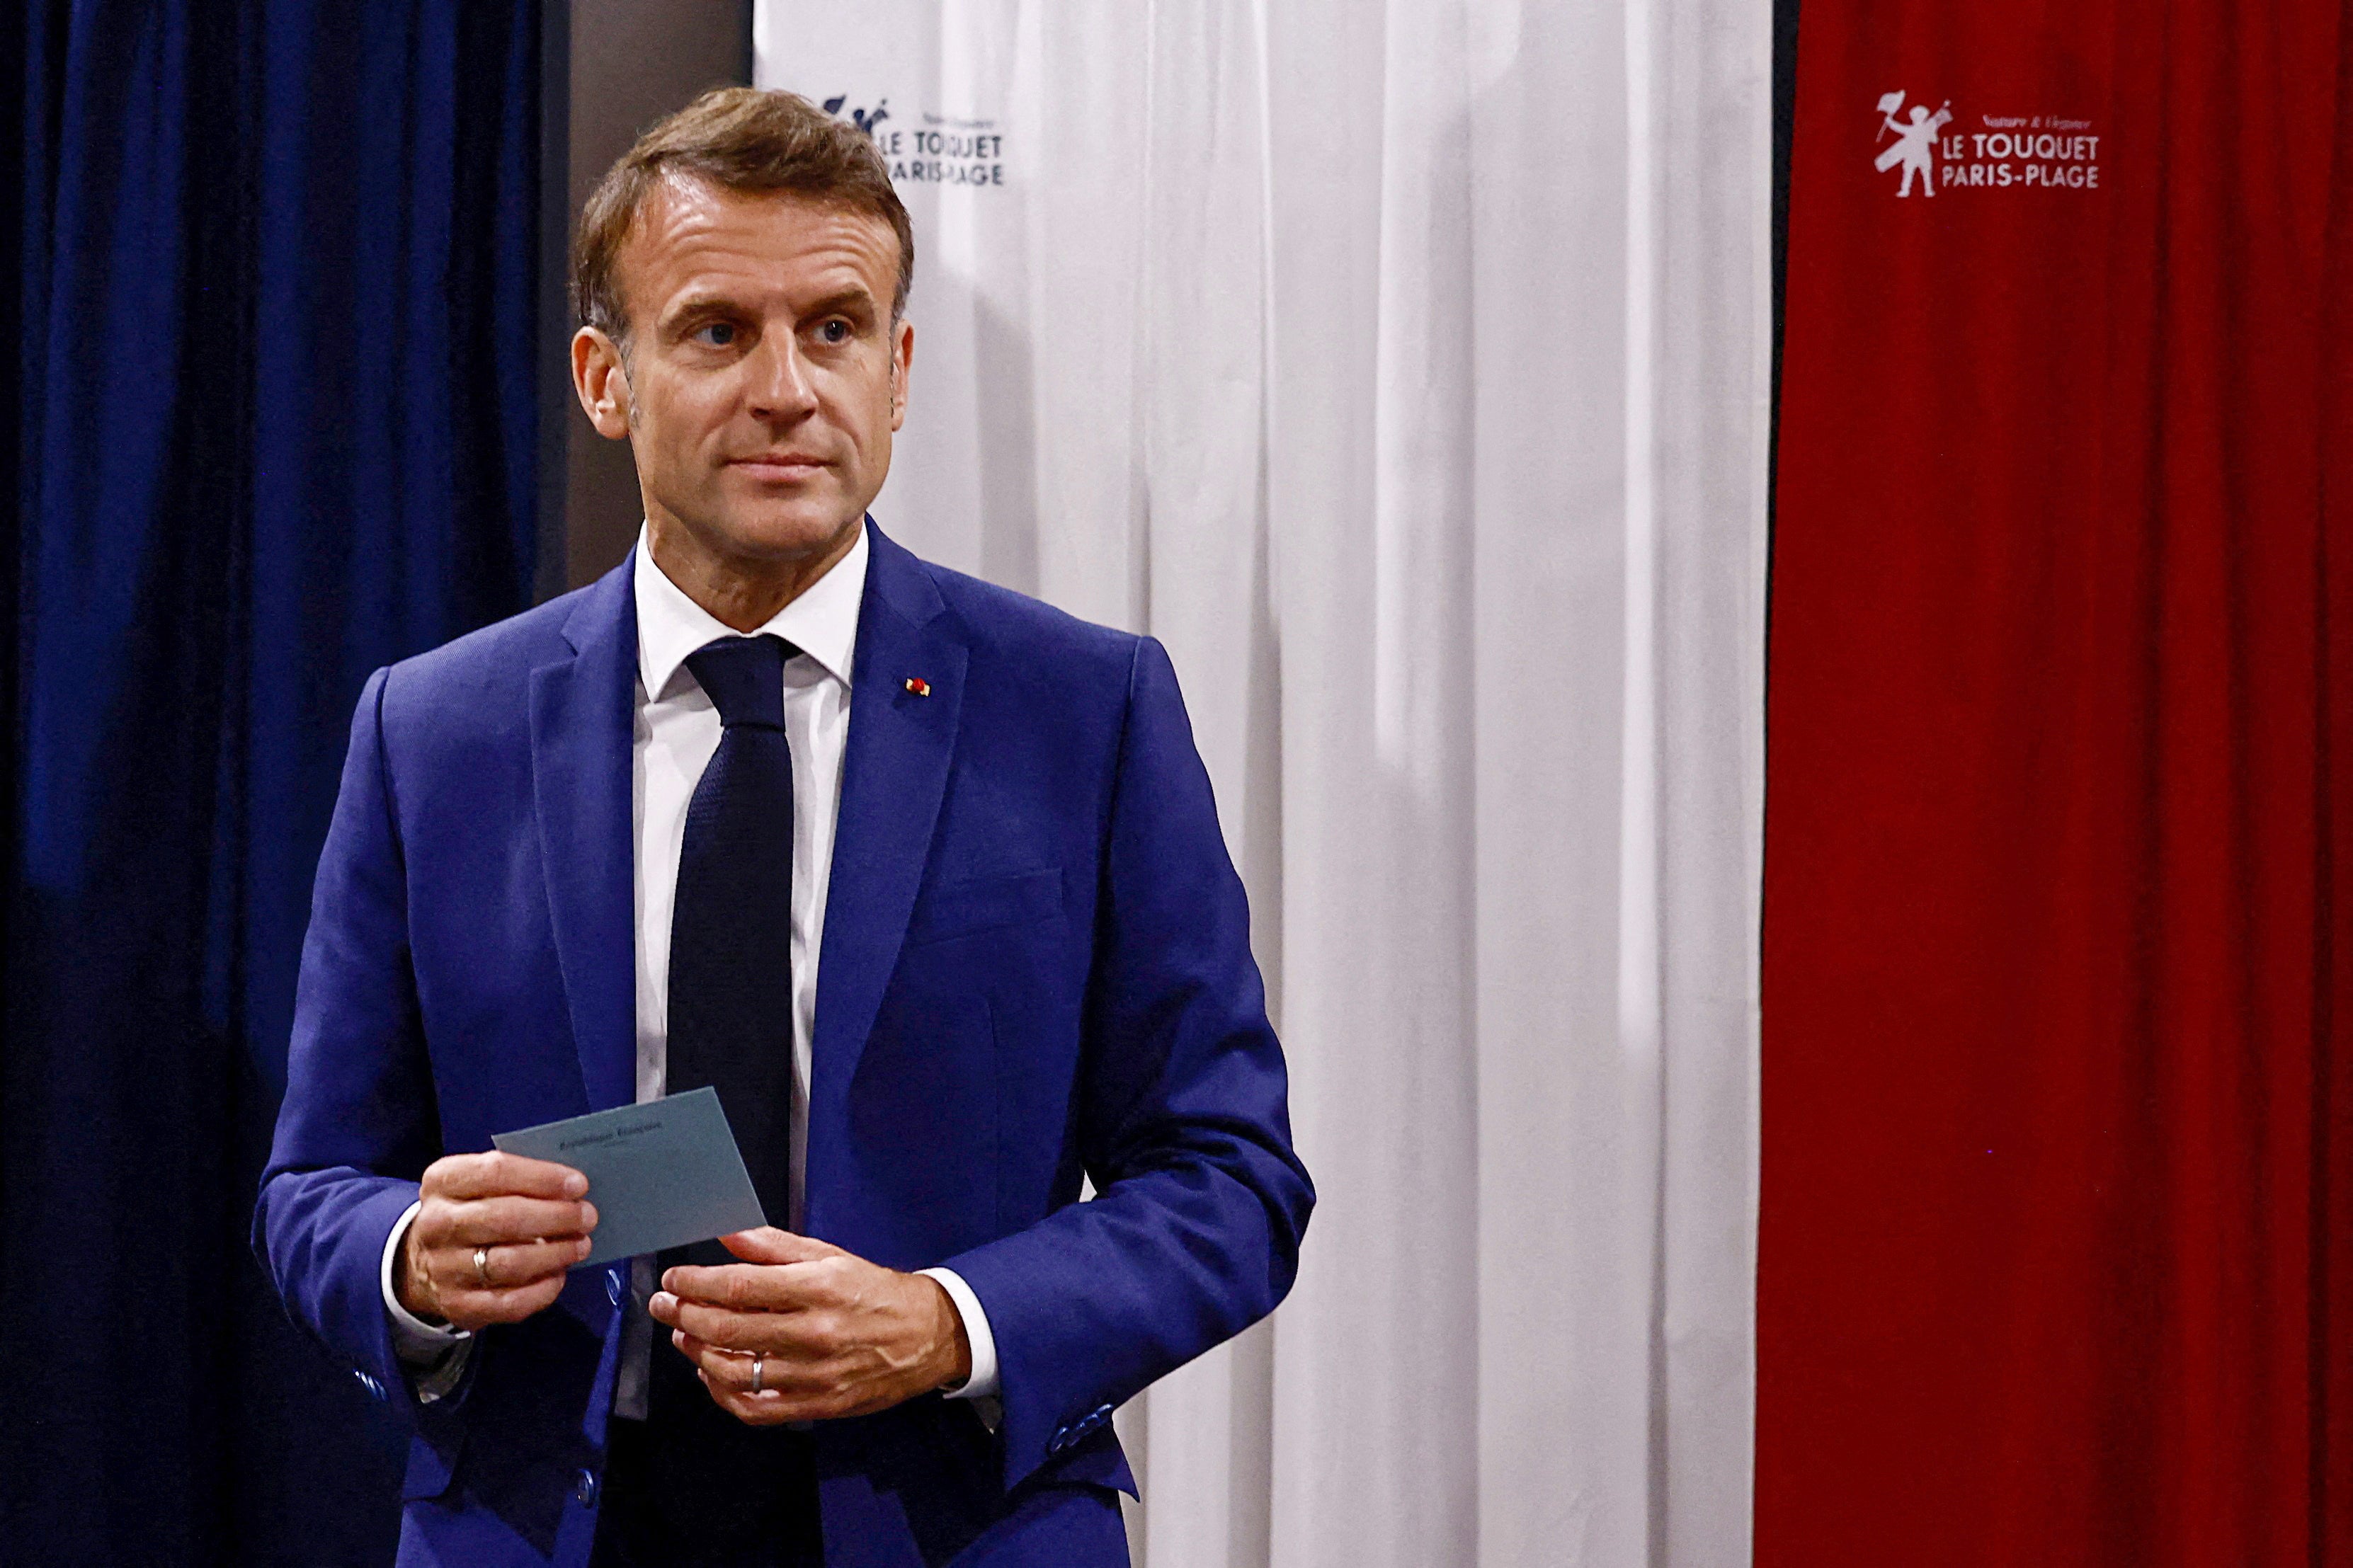 Macron has found himself caught between his allies